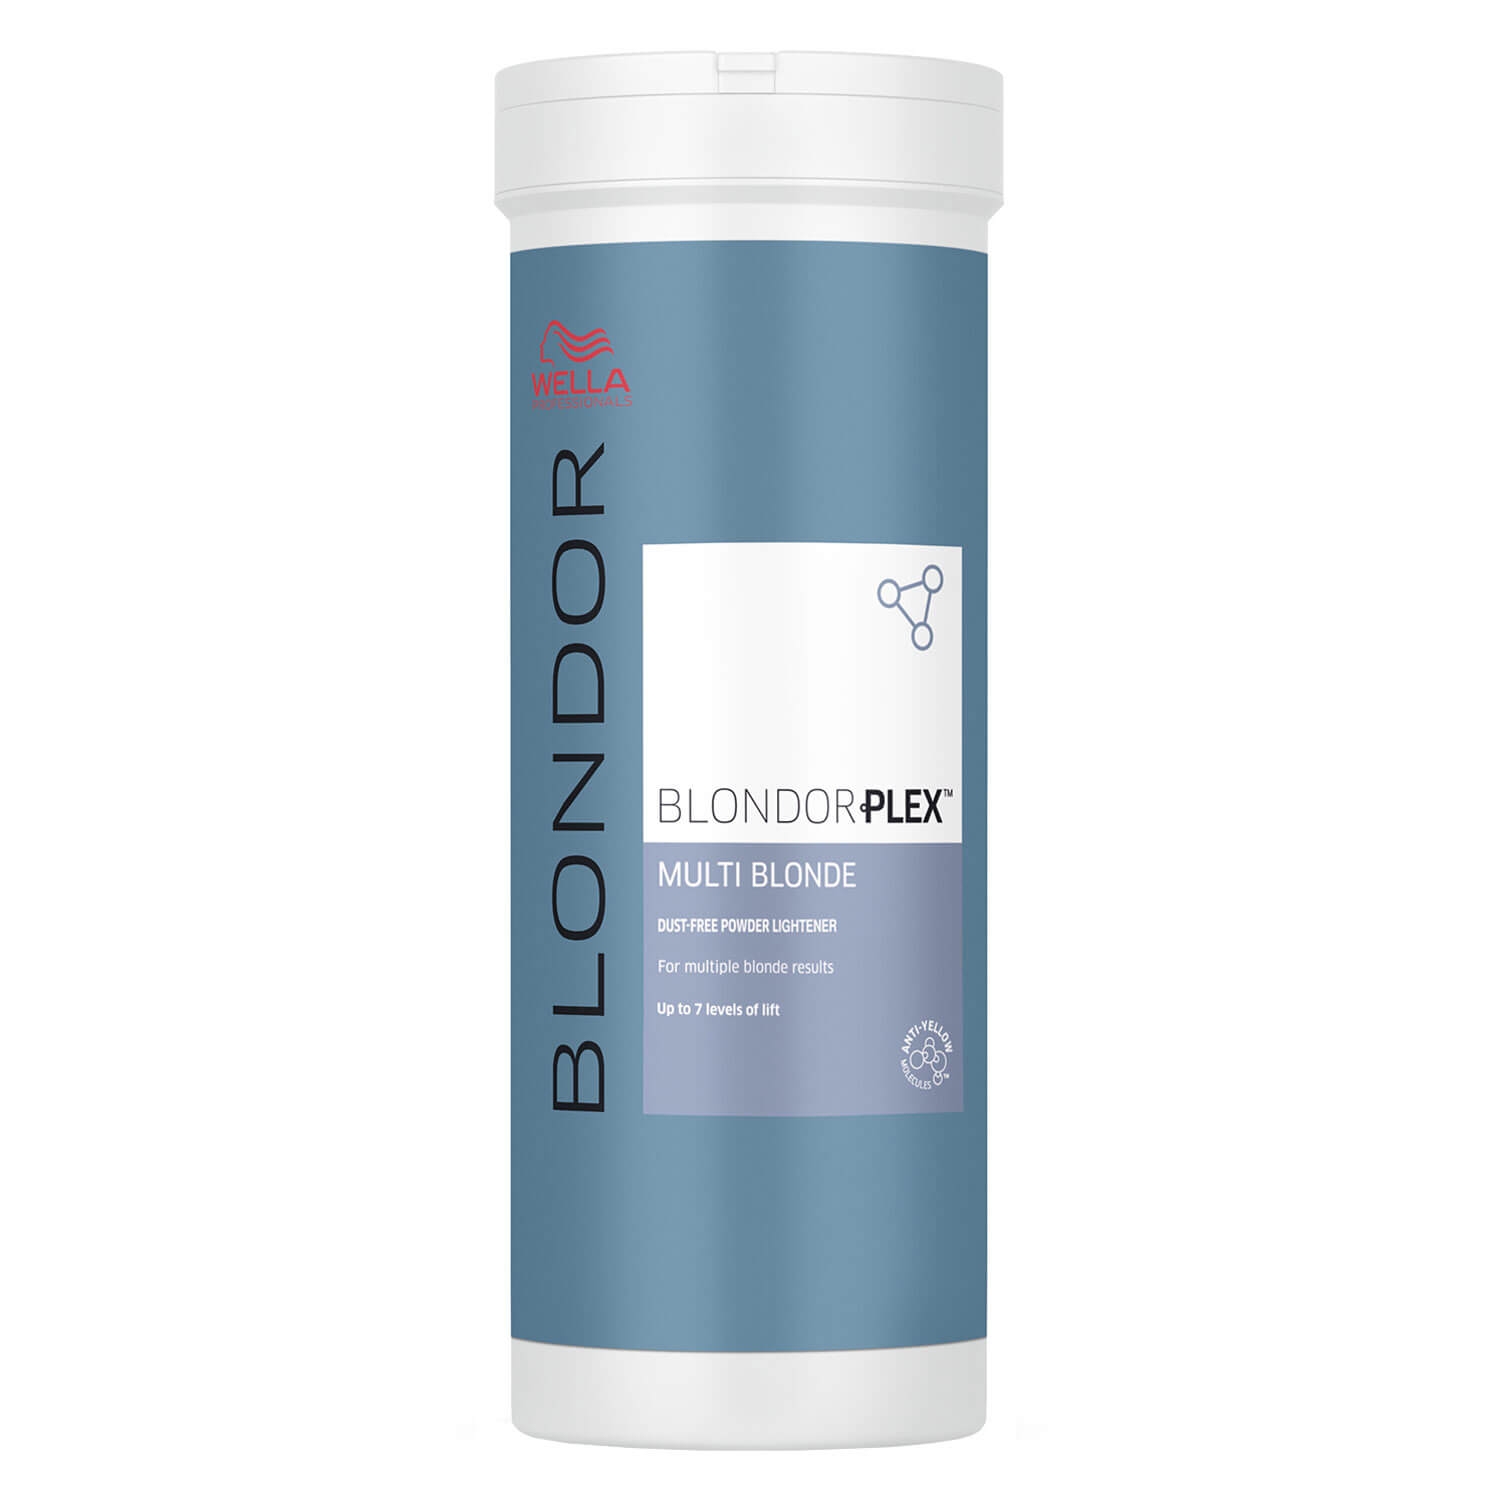 Product image from Blondor - Blondorplex Multi Blonde